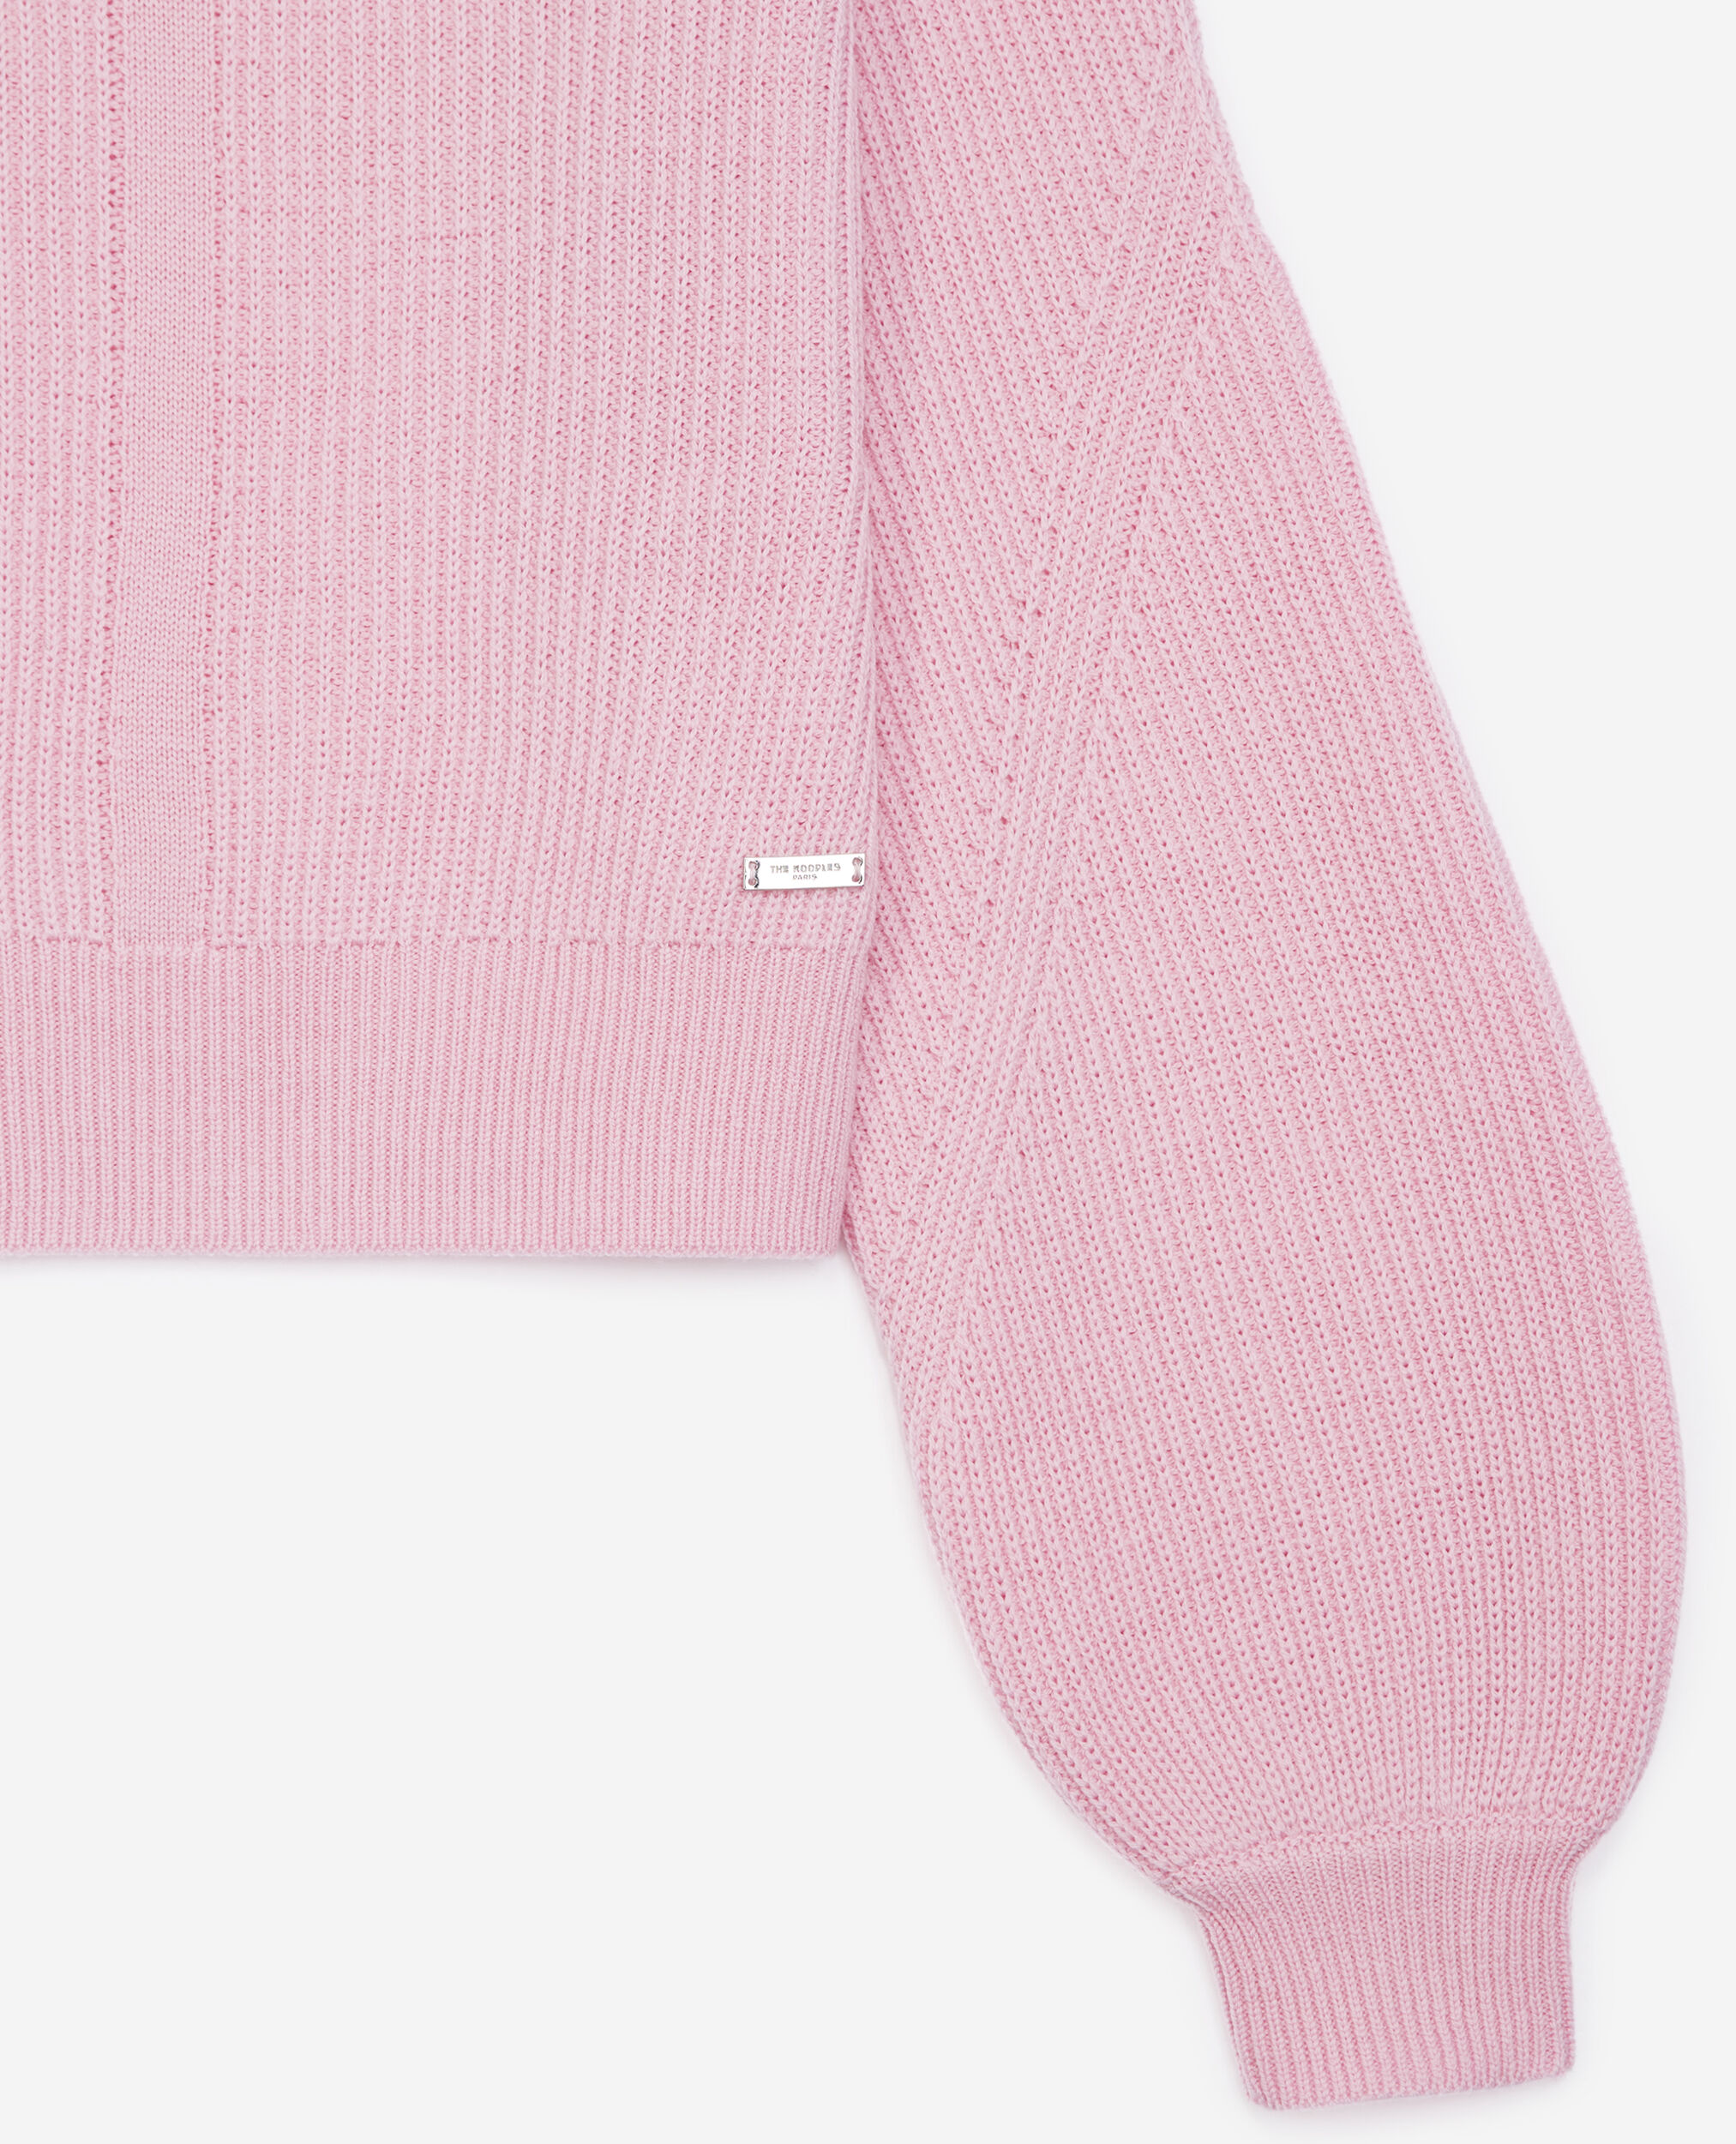 Jersey rosa claro lana merina amplio, PINK, hi-res image number null